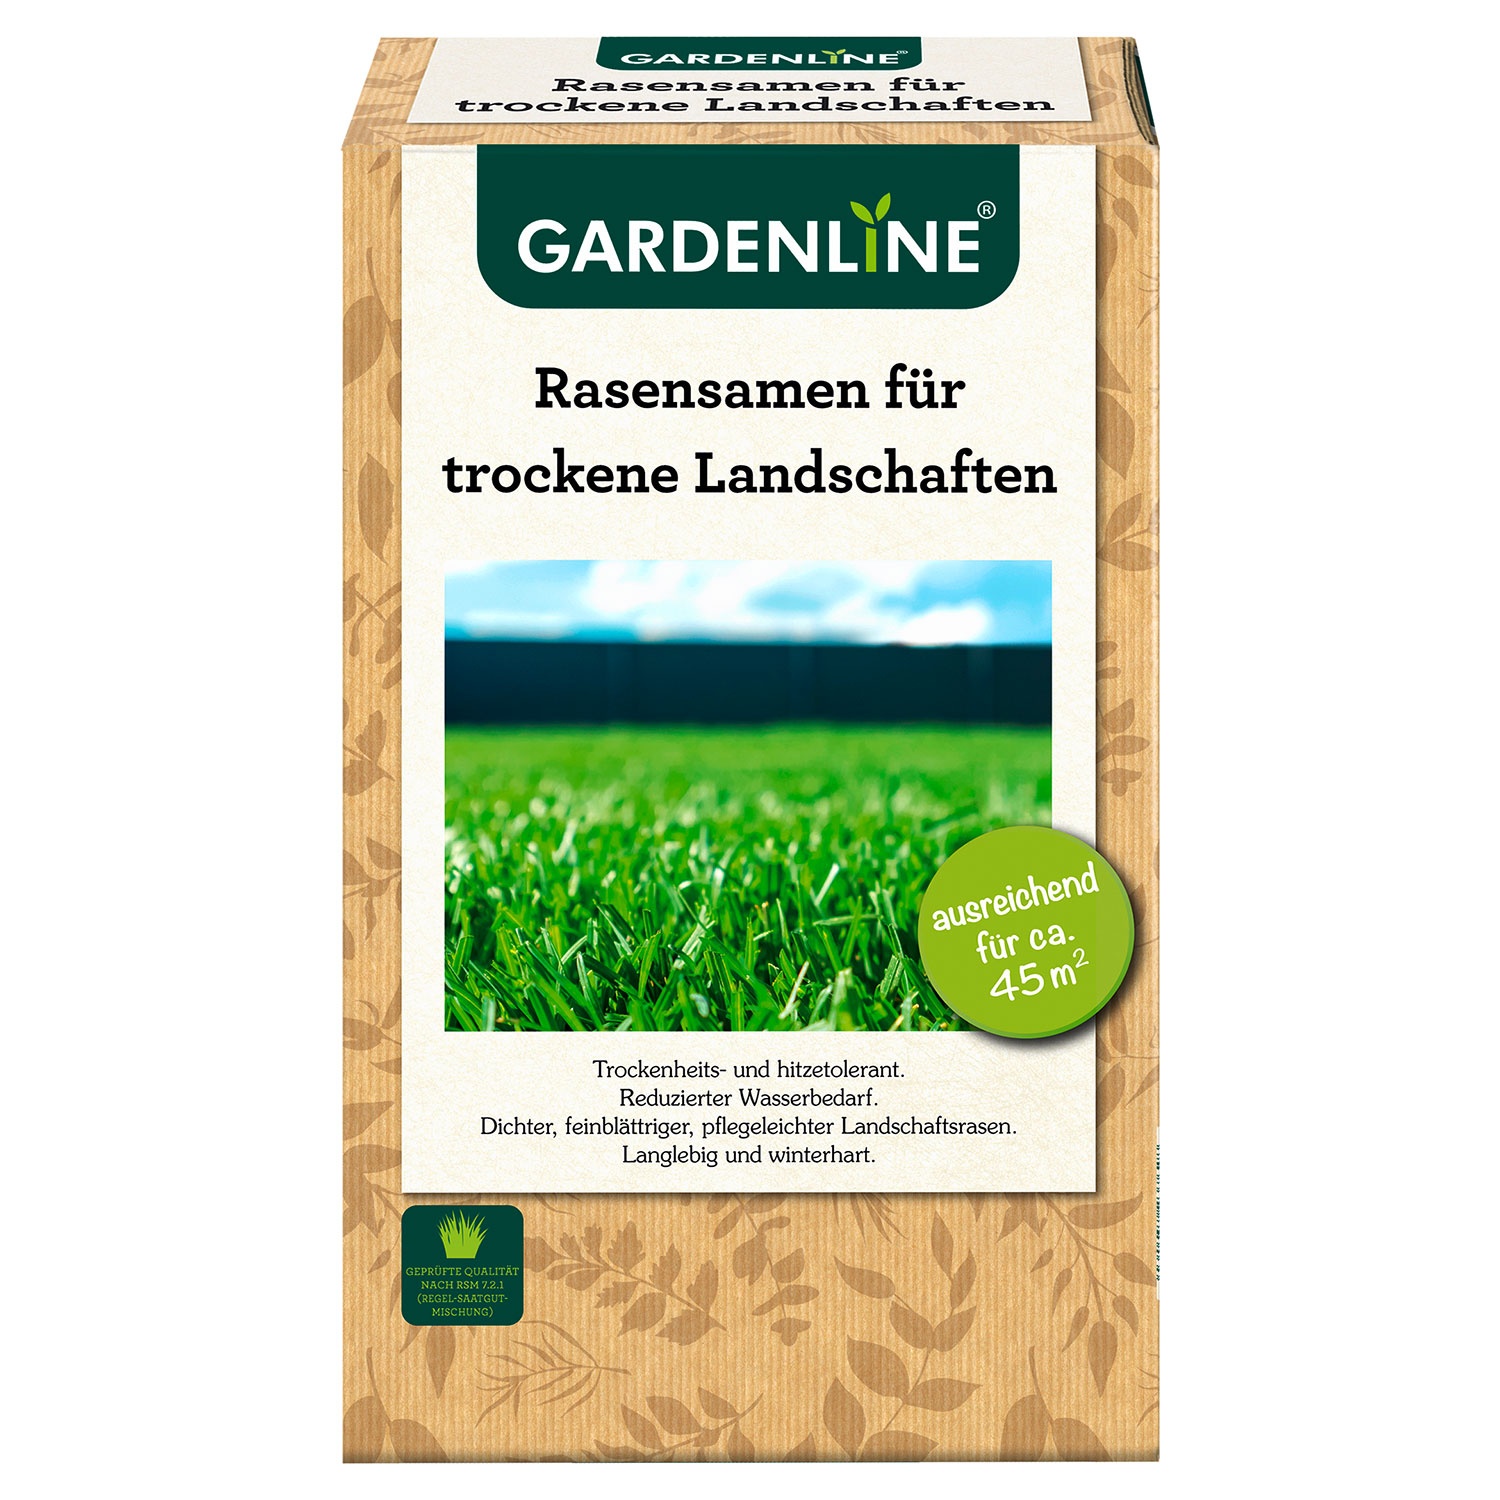 GARDENLINE® Rasensamen für trockene Landschaften 1 kg